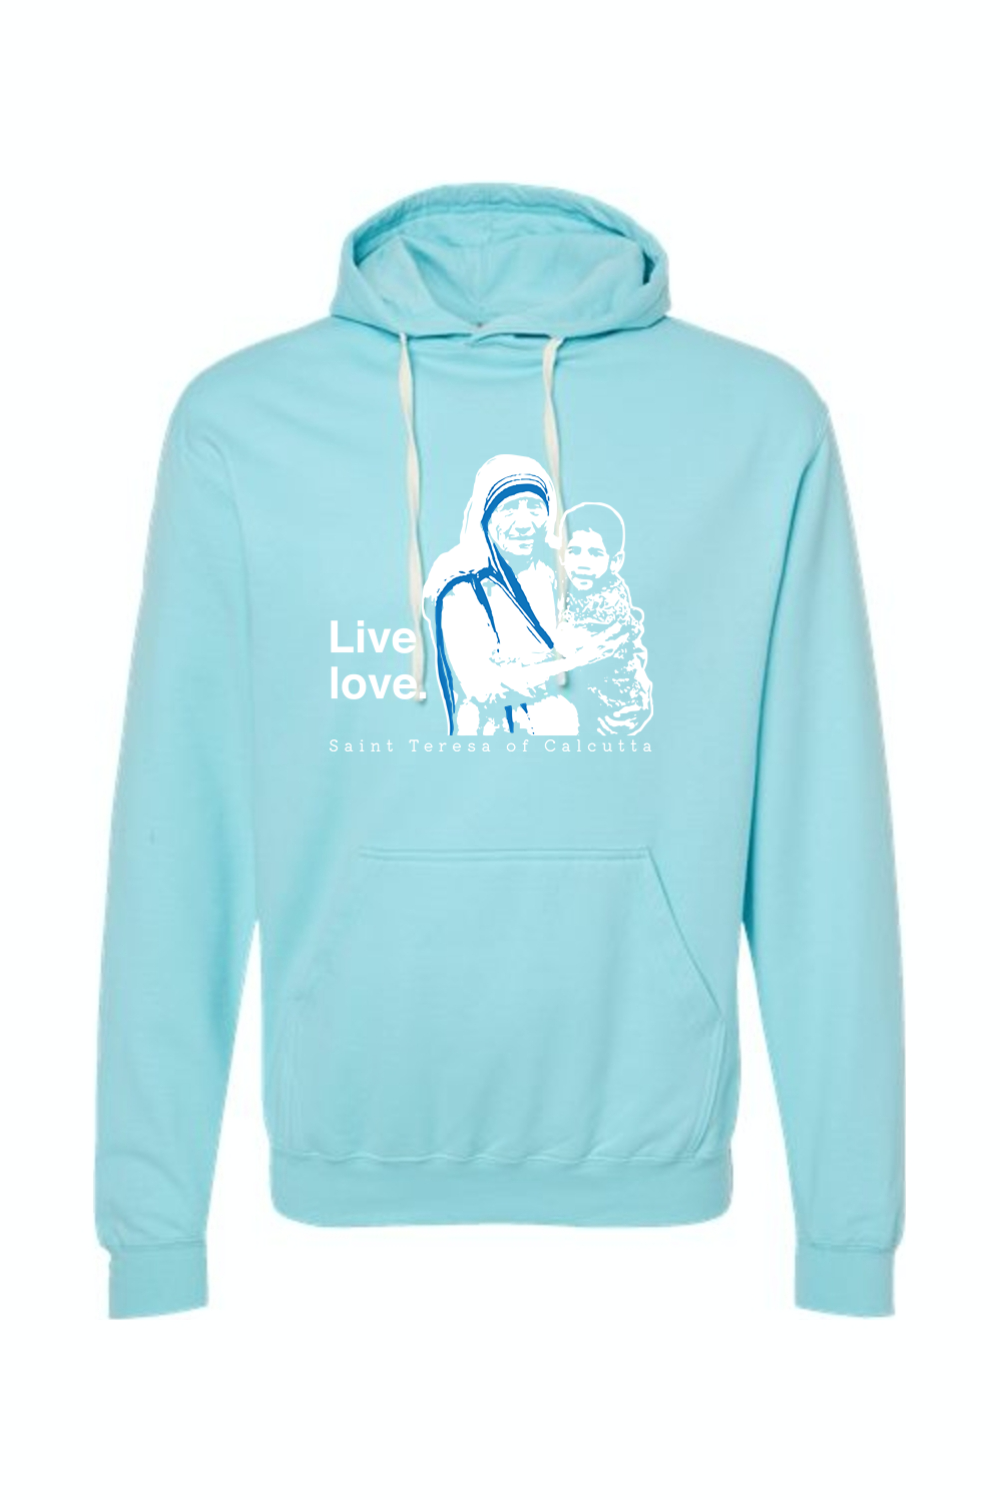 Live Love - St. Teresa of Calcutta Hoodie Sweatshirt